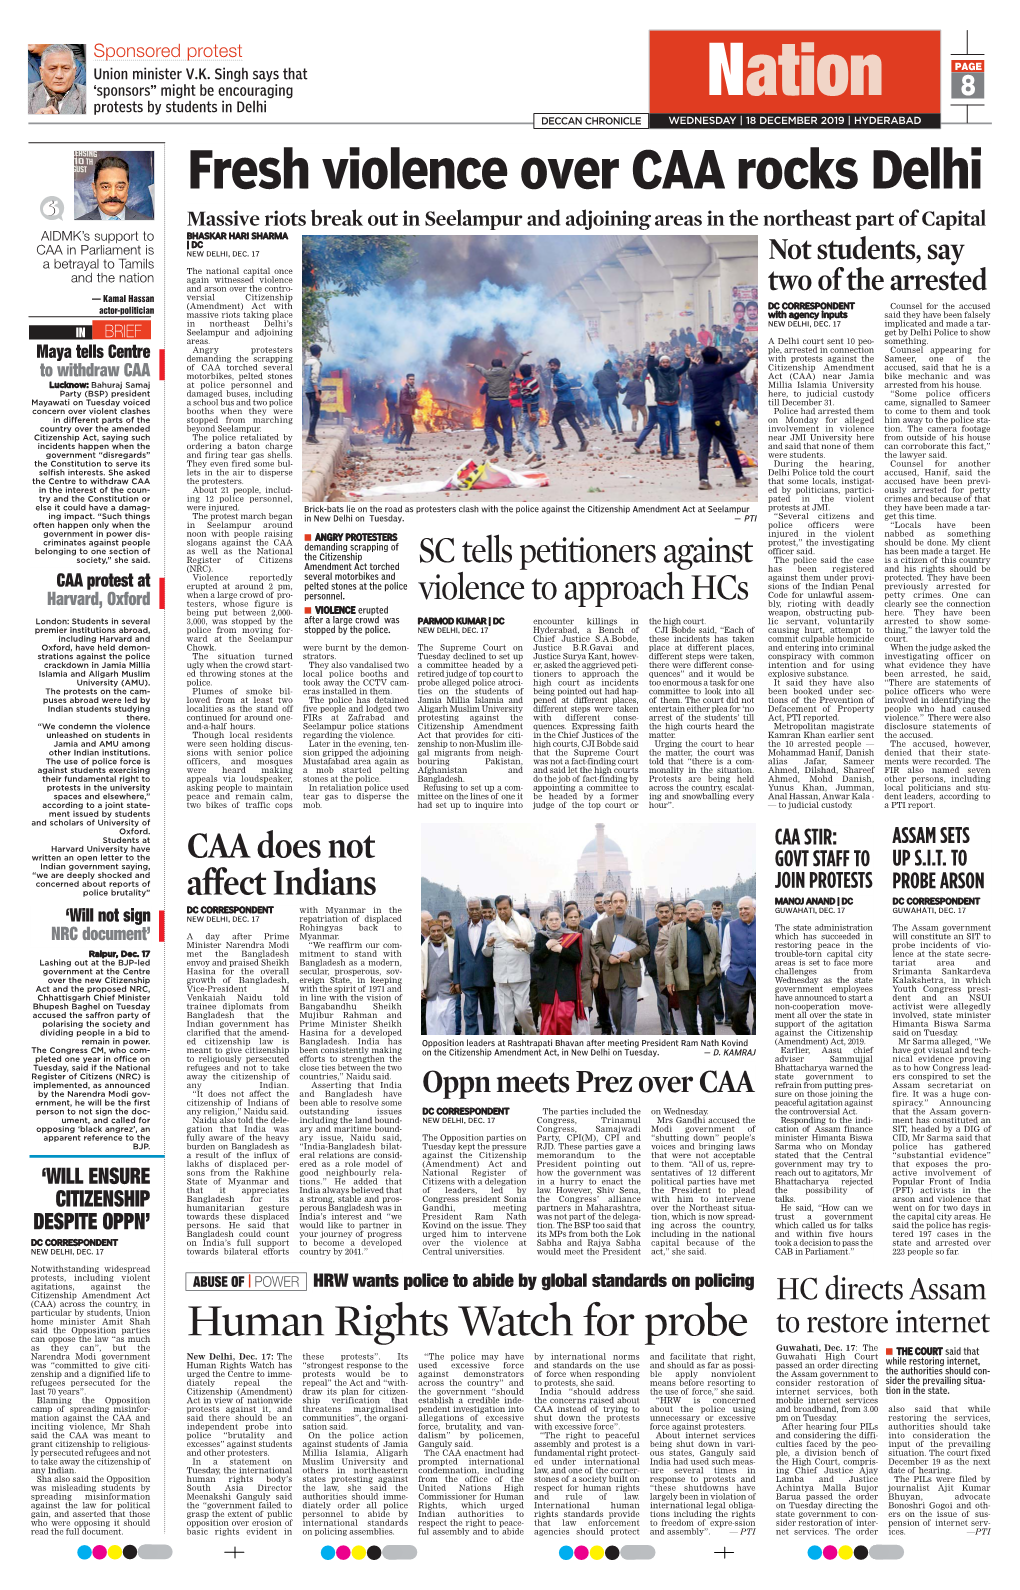 Fresh Violence Over CAA Rocks Delhi